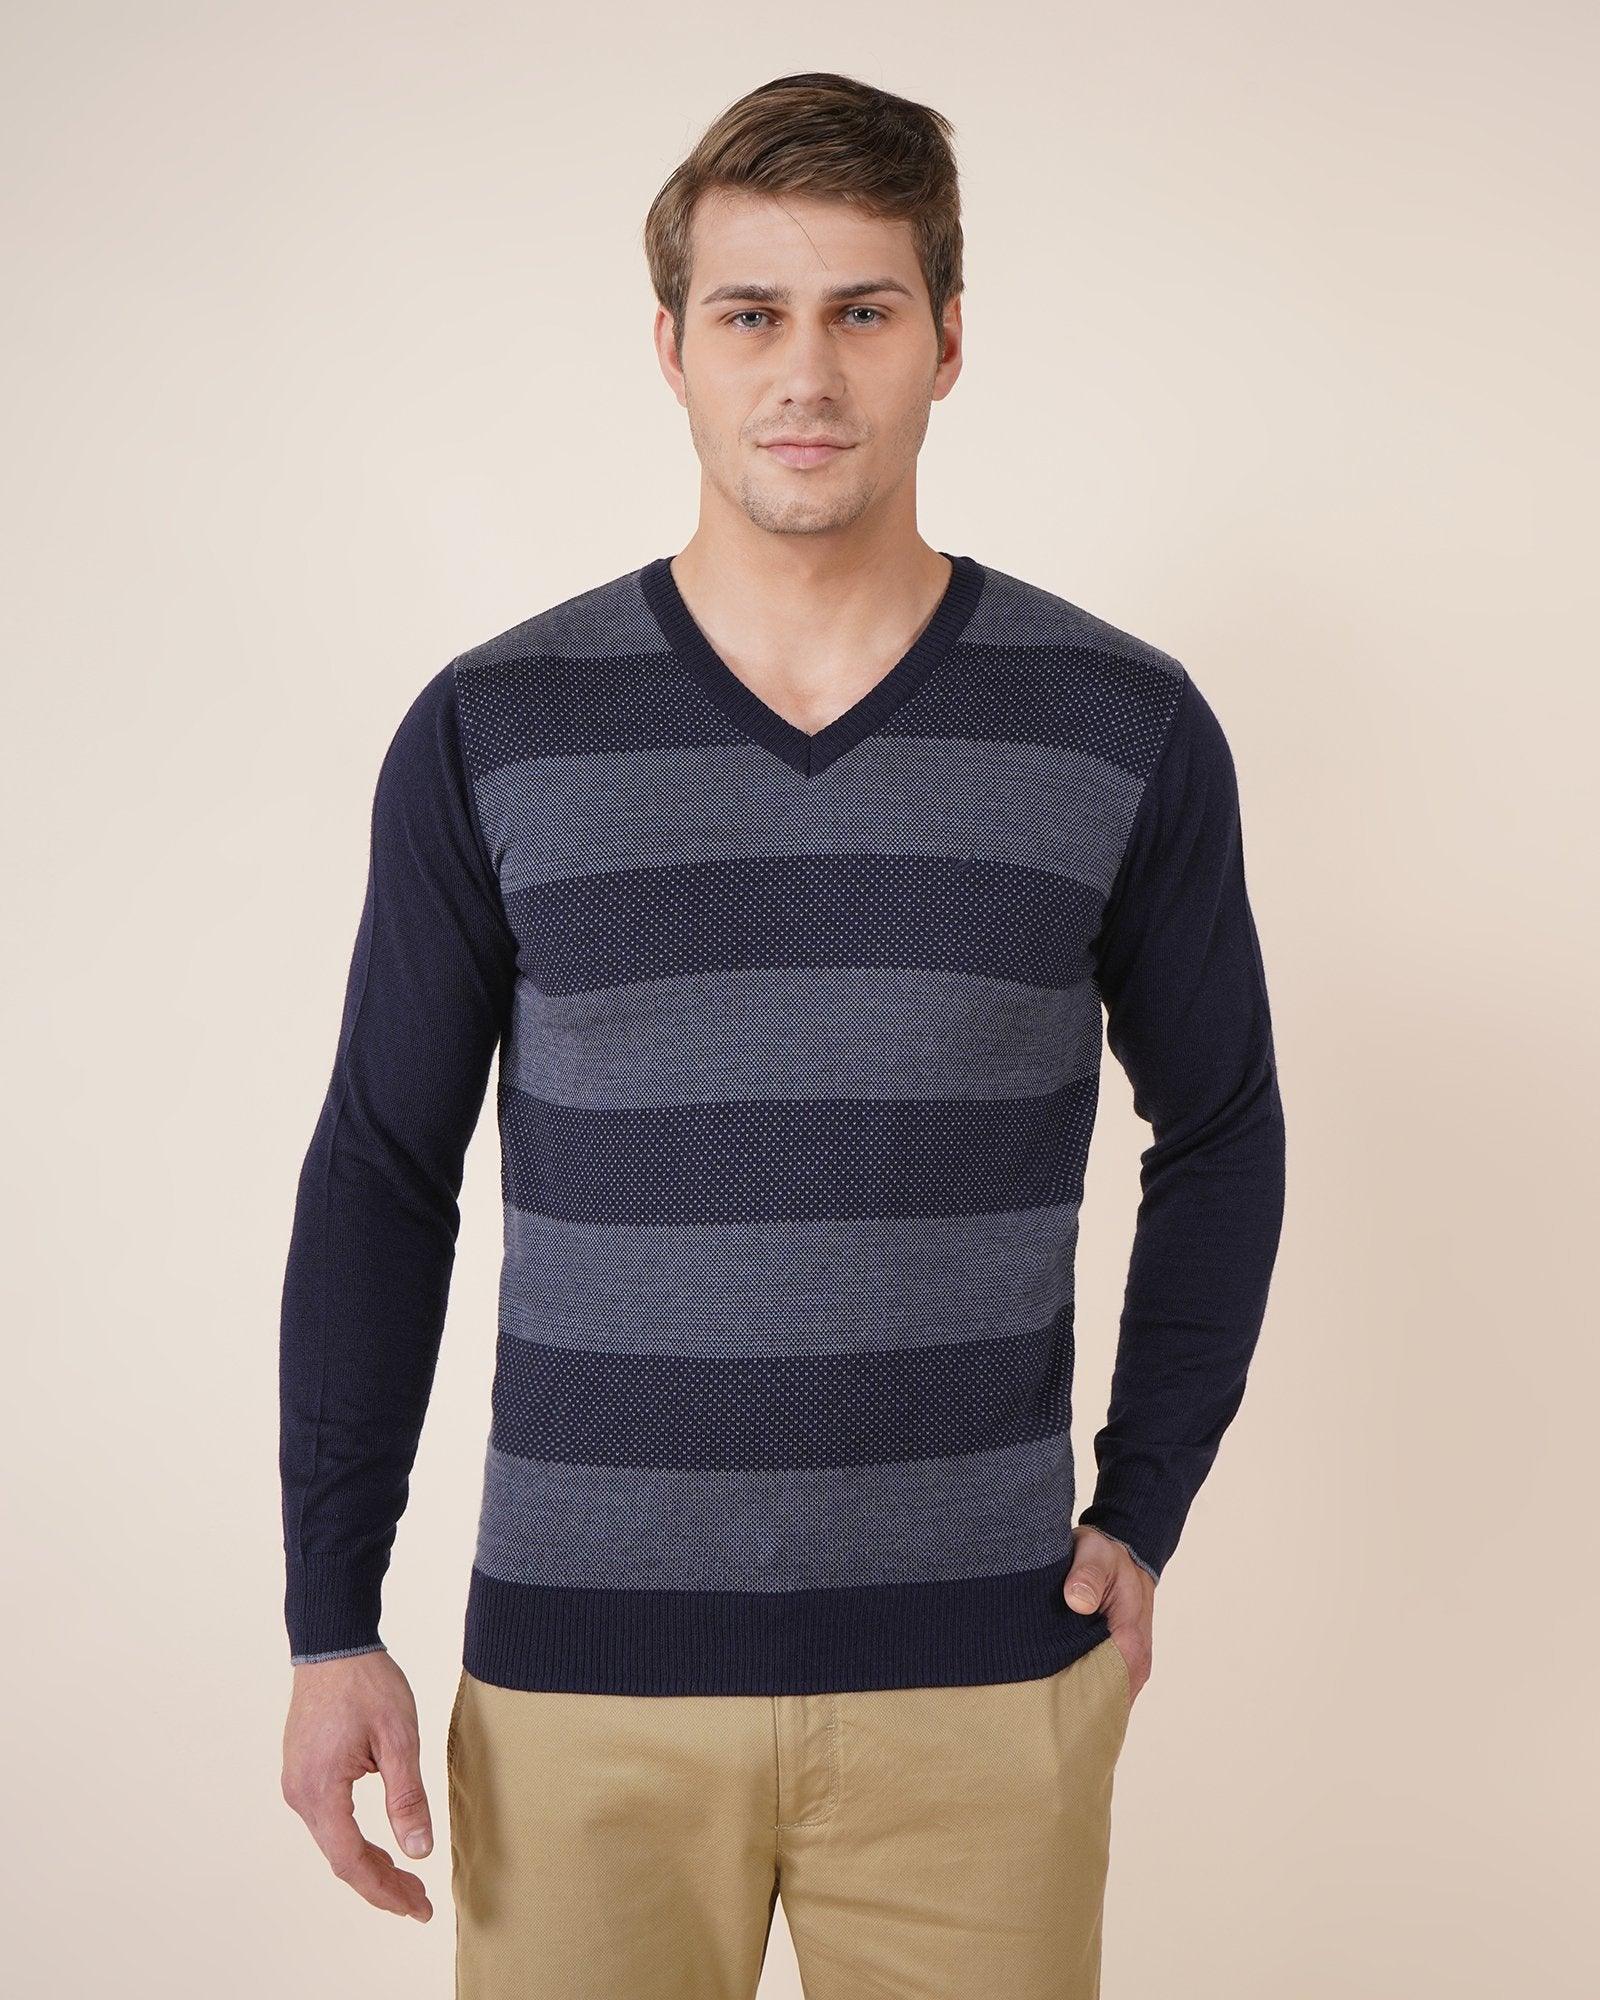 v-neck navy textured sweater - asppattern